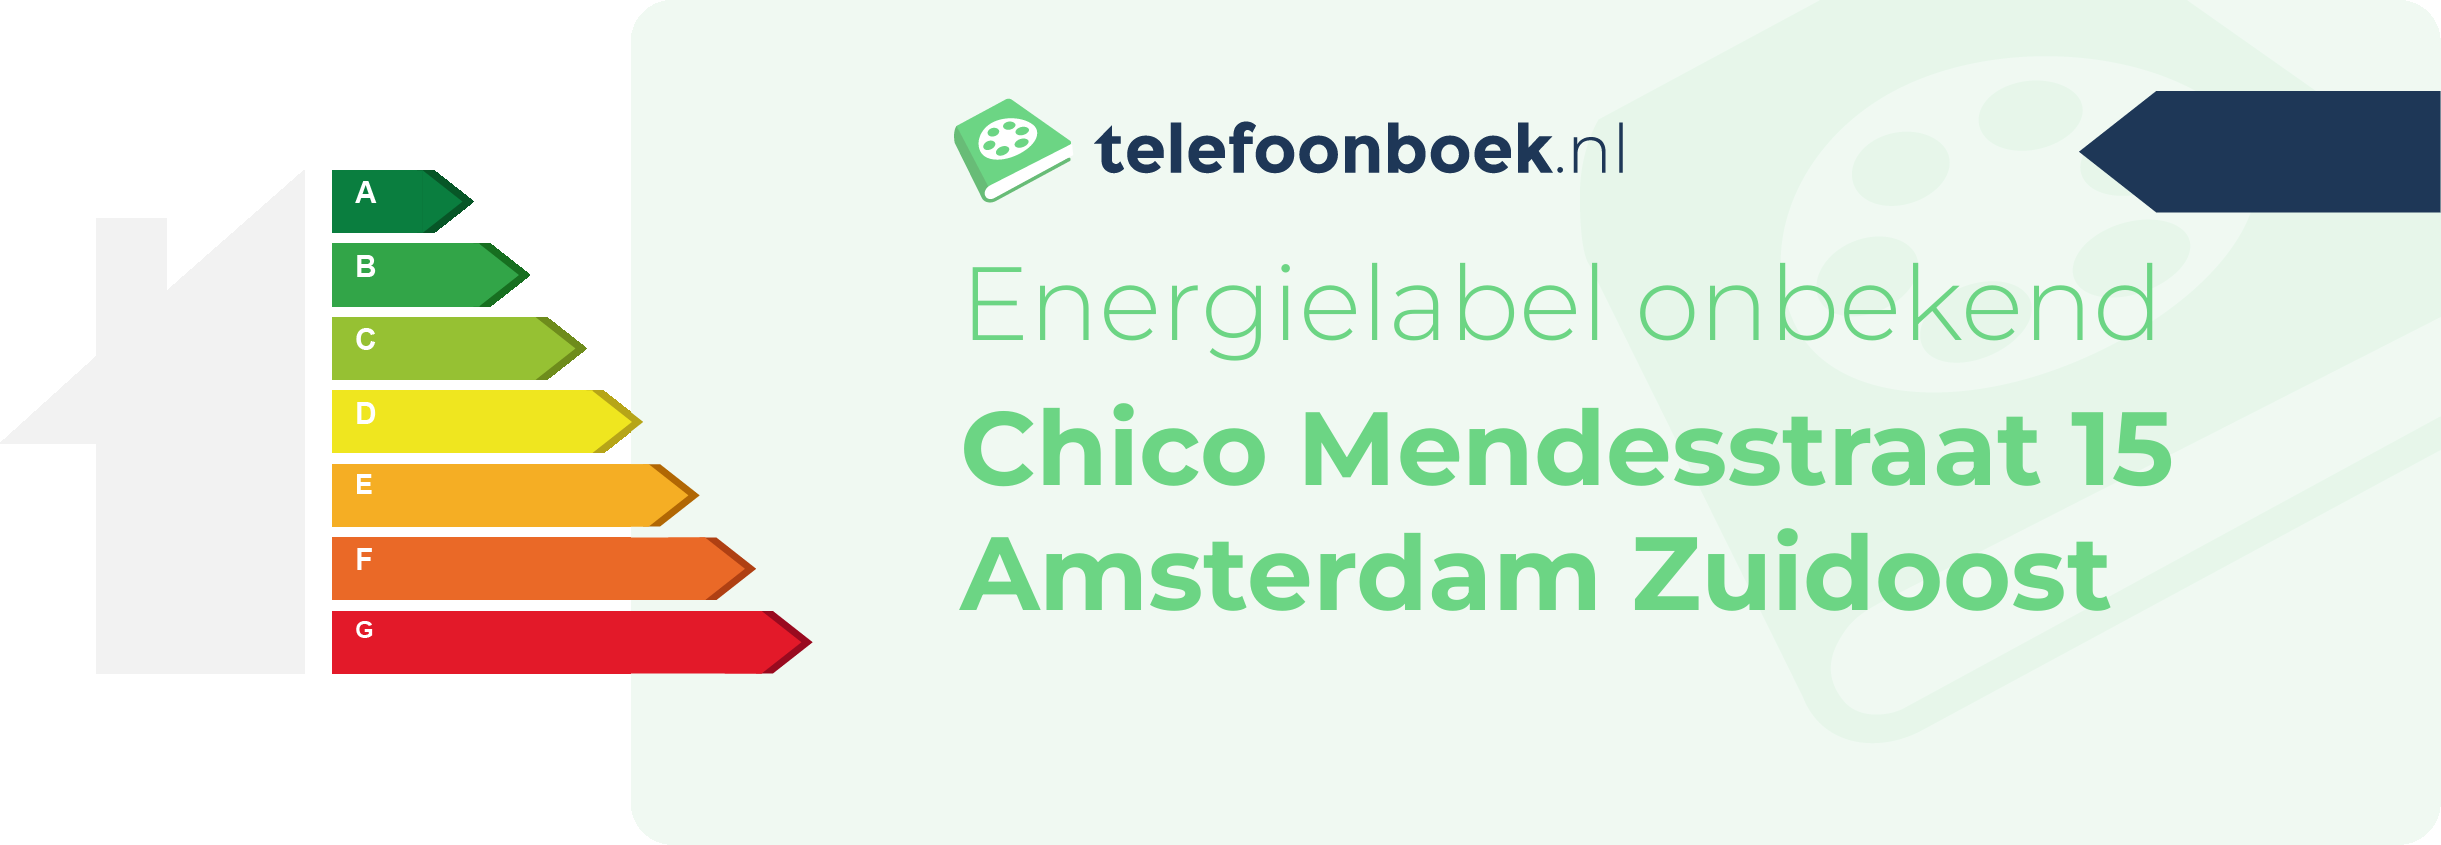 Energielabel Chico Mendesstraat 15 Amsterdam Zuidoost